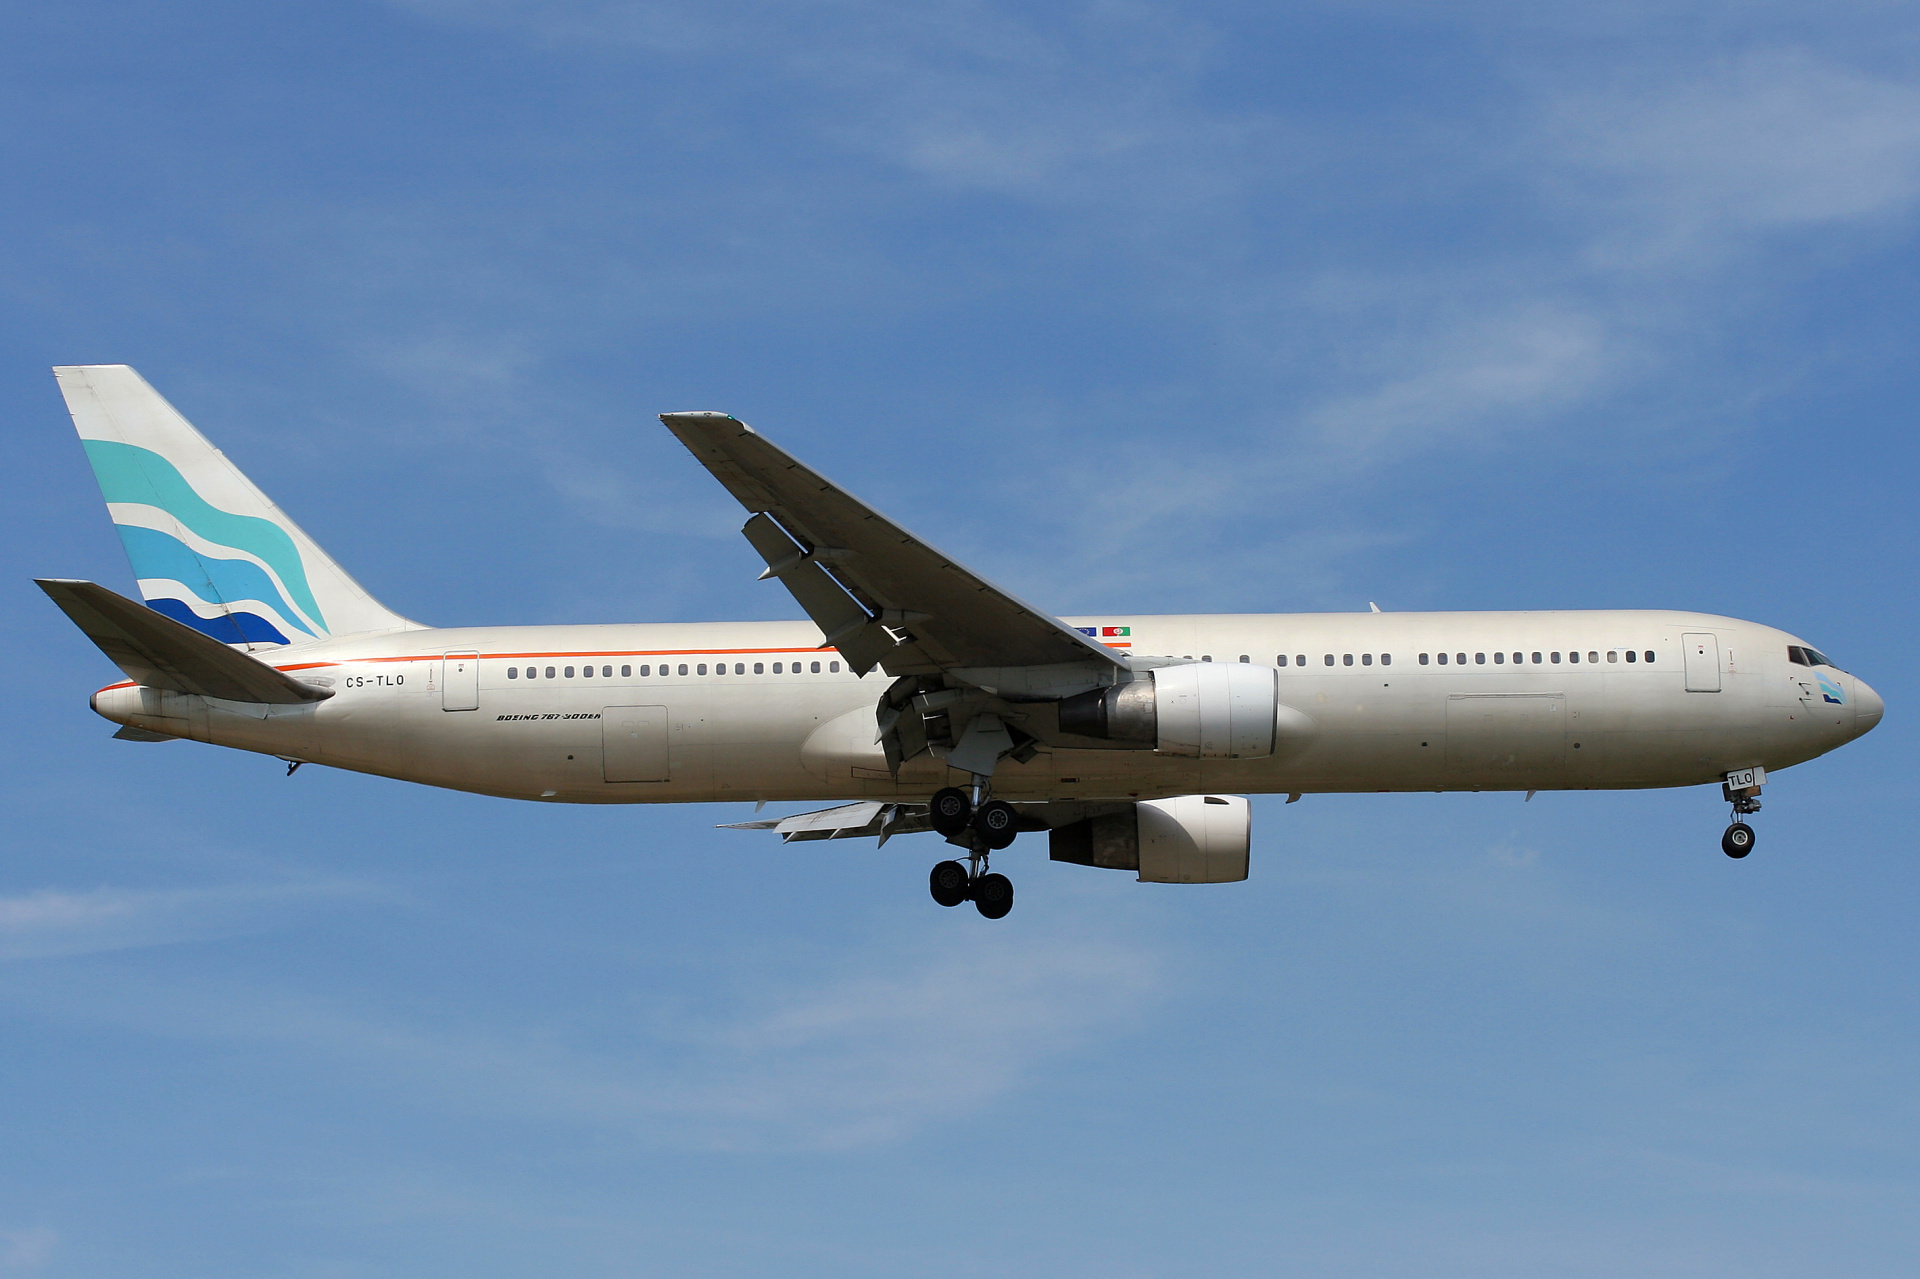 {"em":"CS-TLO (hybrid livery)","pl":"CS-TLO (malowanie hybrydowe)"} (Aircraft » EPWA Spotting » Boeing 767-300 » EuroAtlantic Airways)